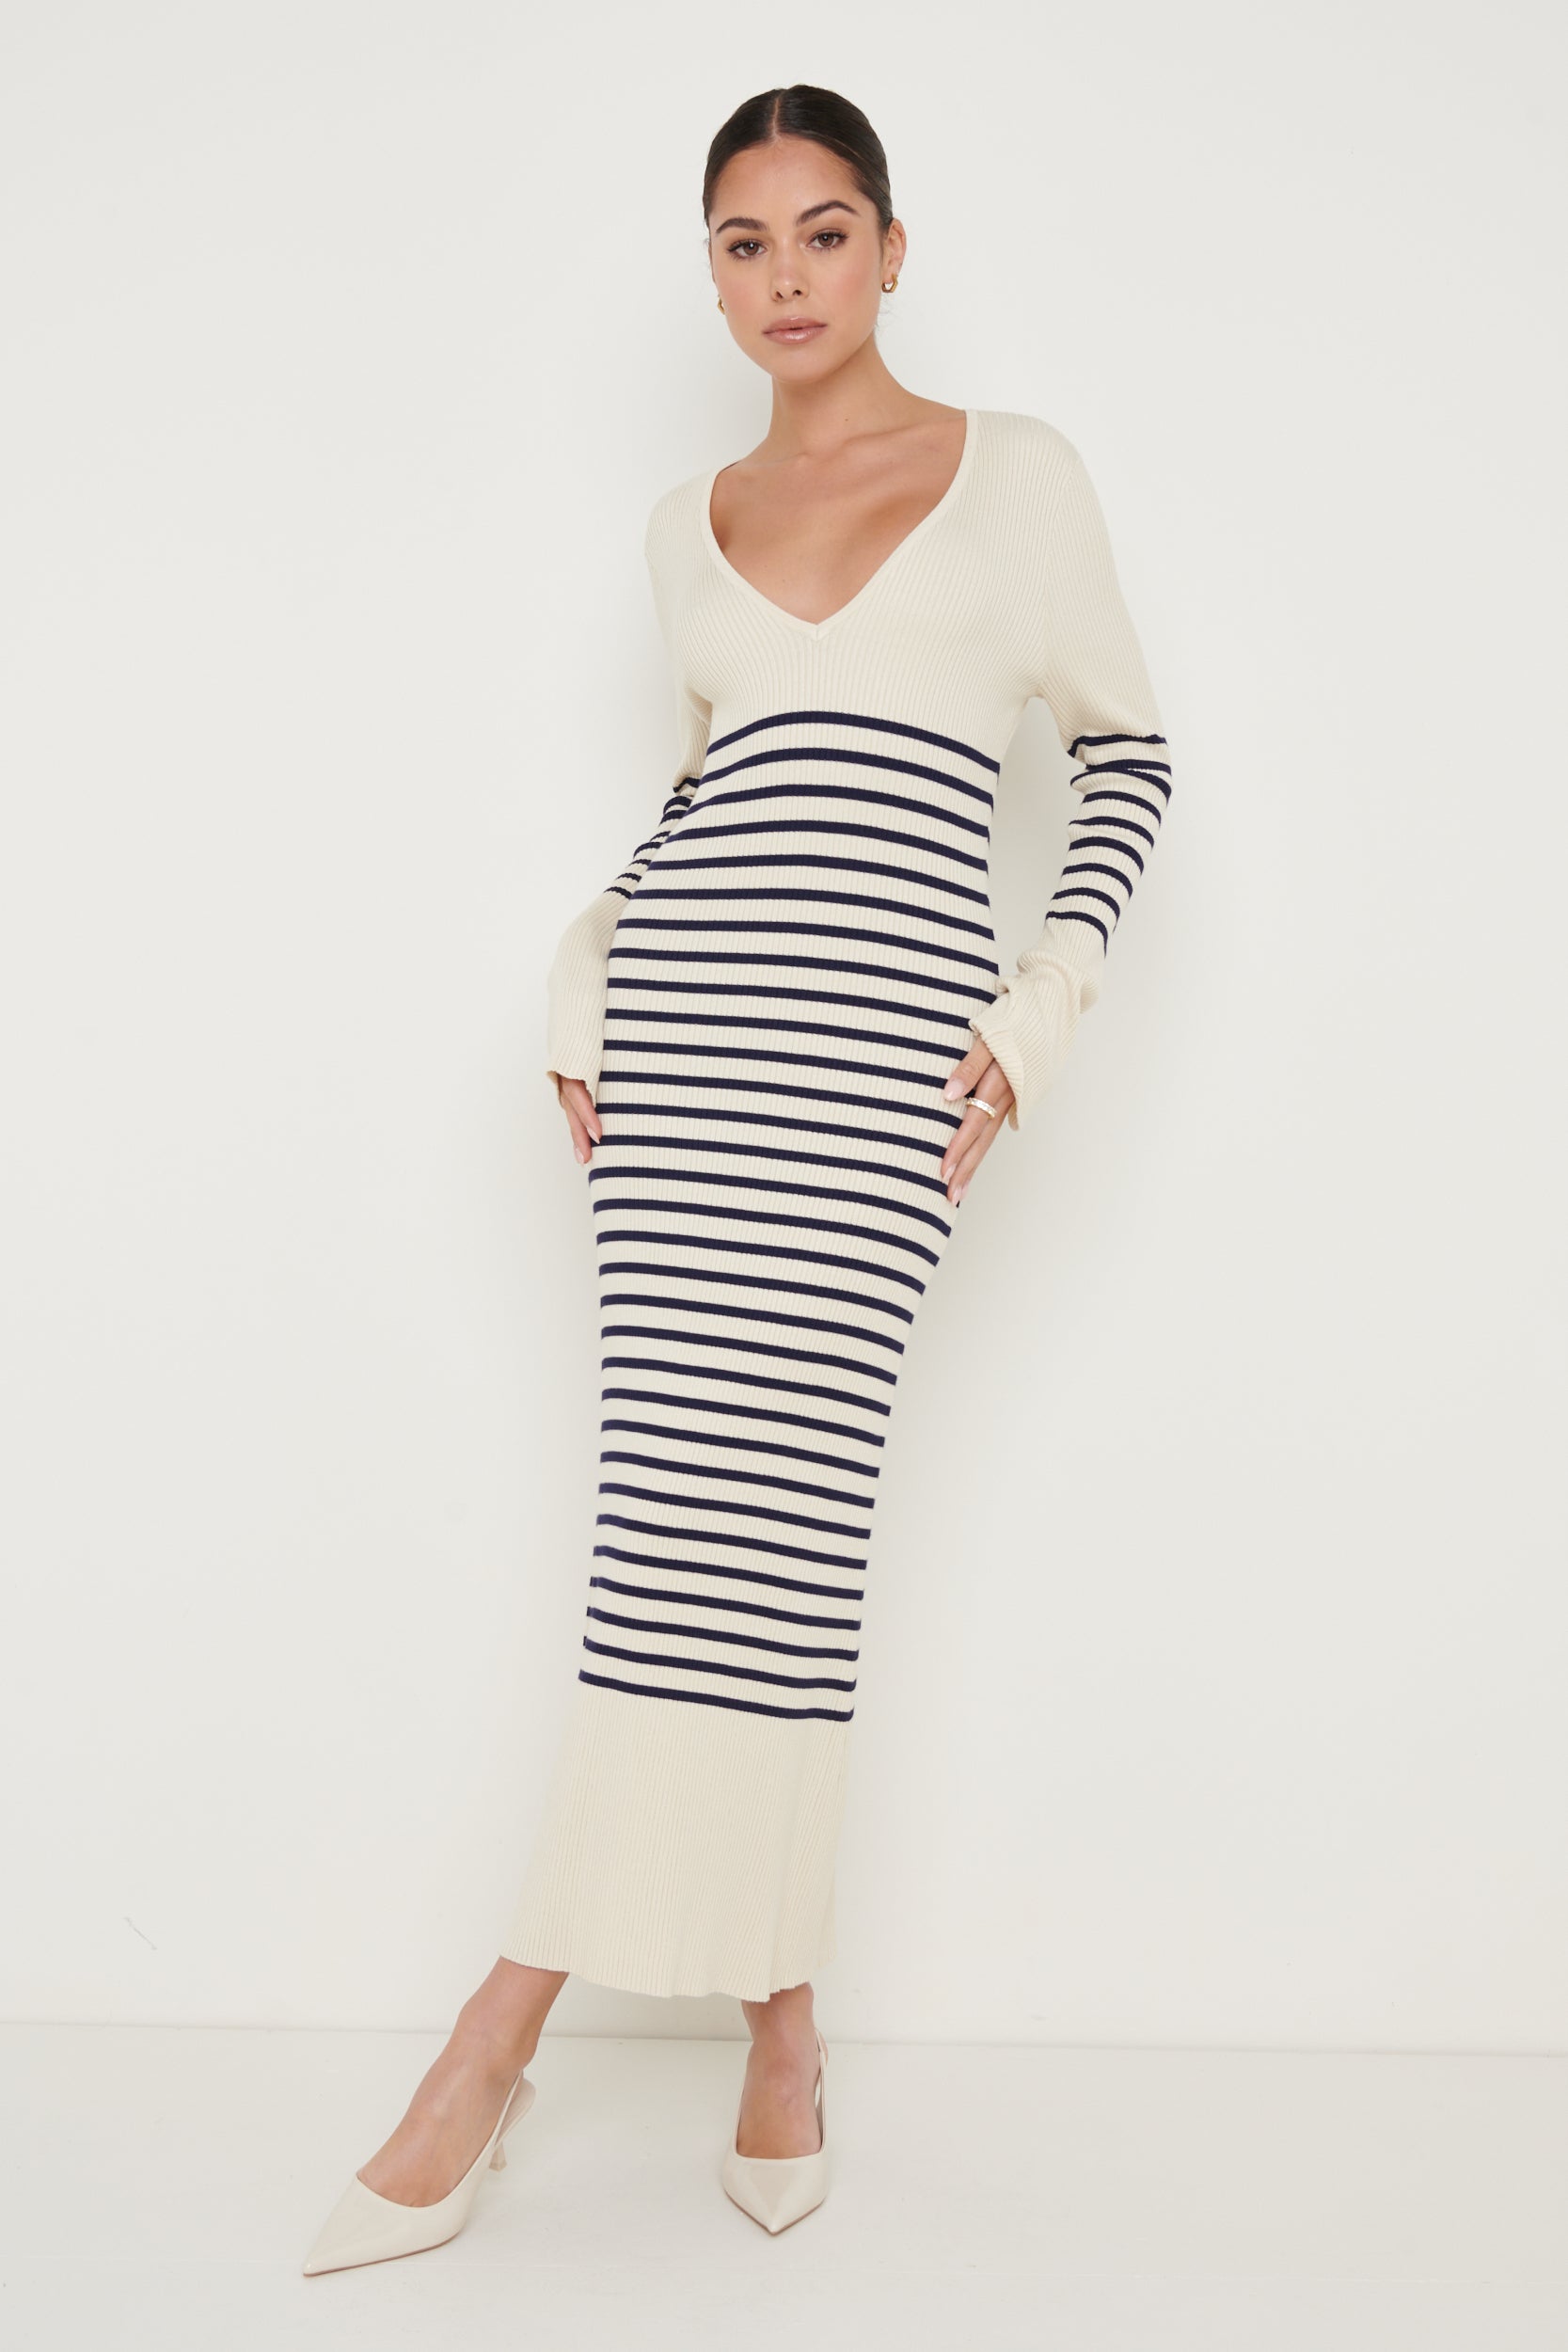 Vanessa Striped Knit Dress - Cream and Blue, L